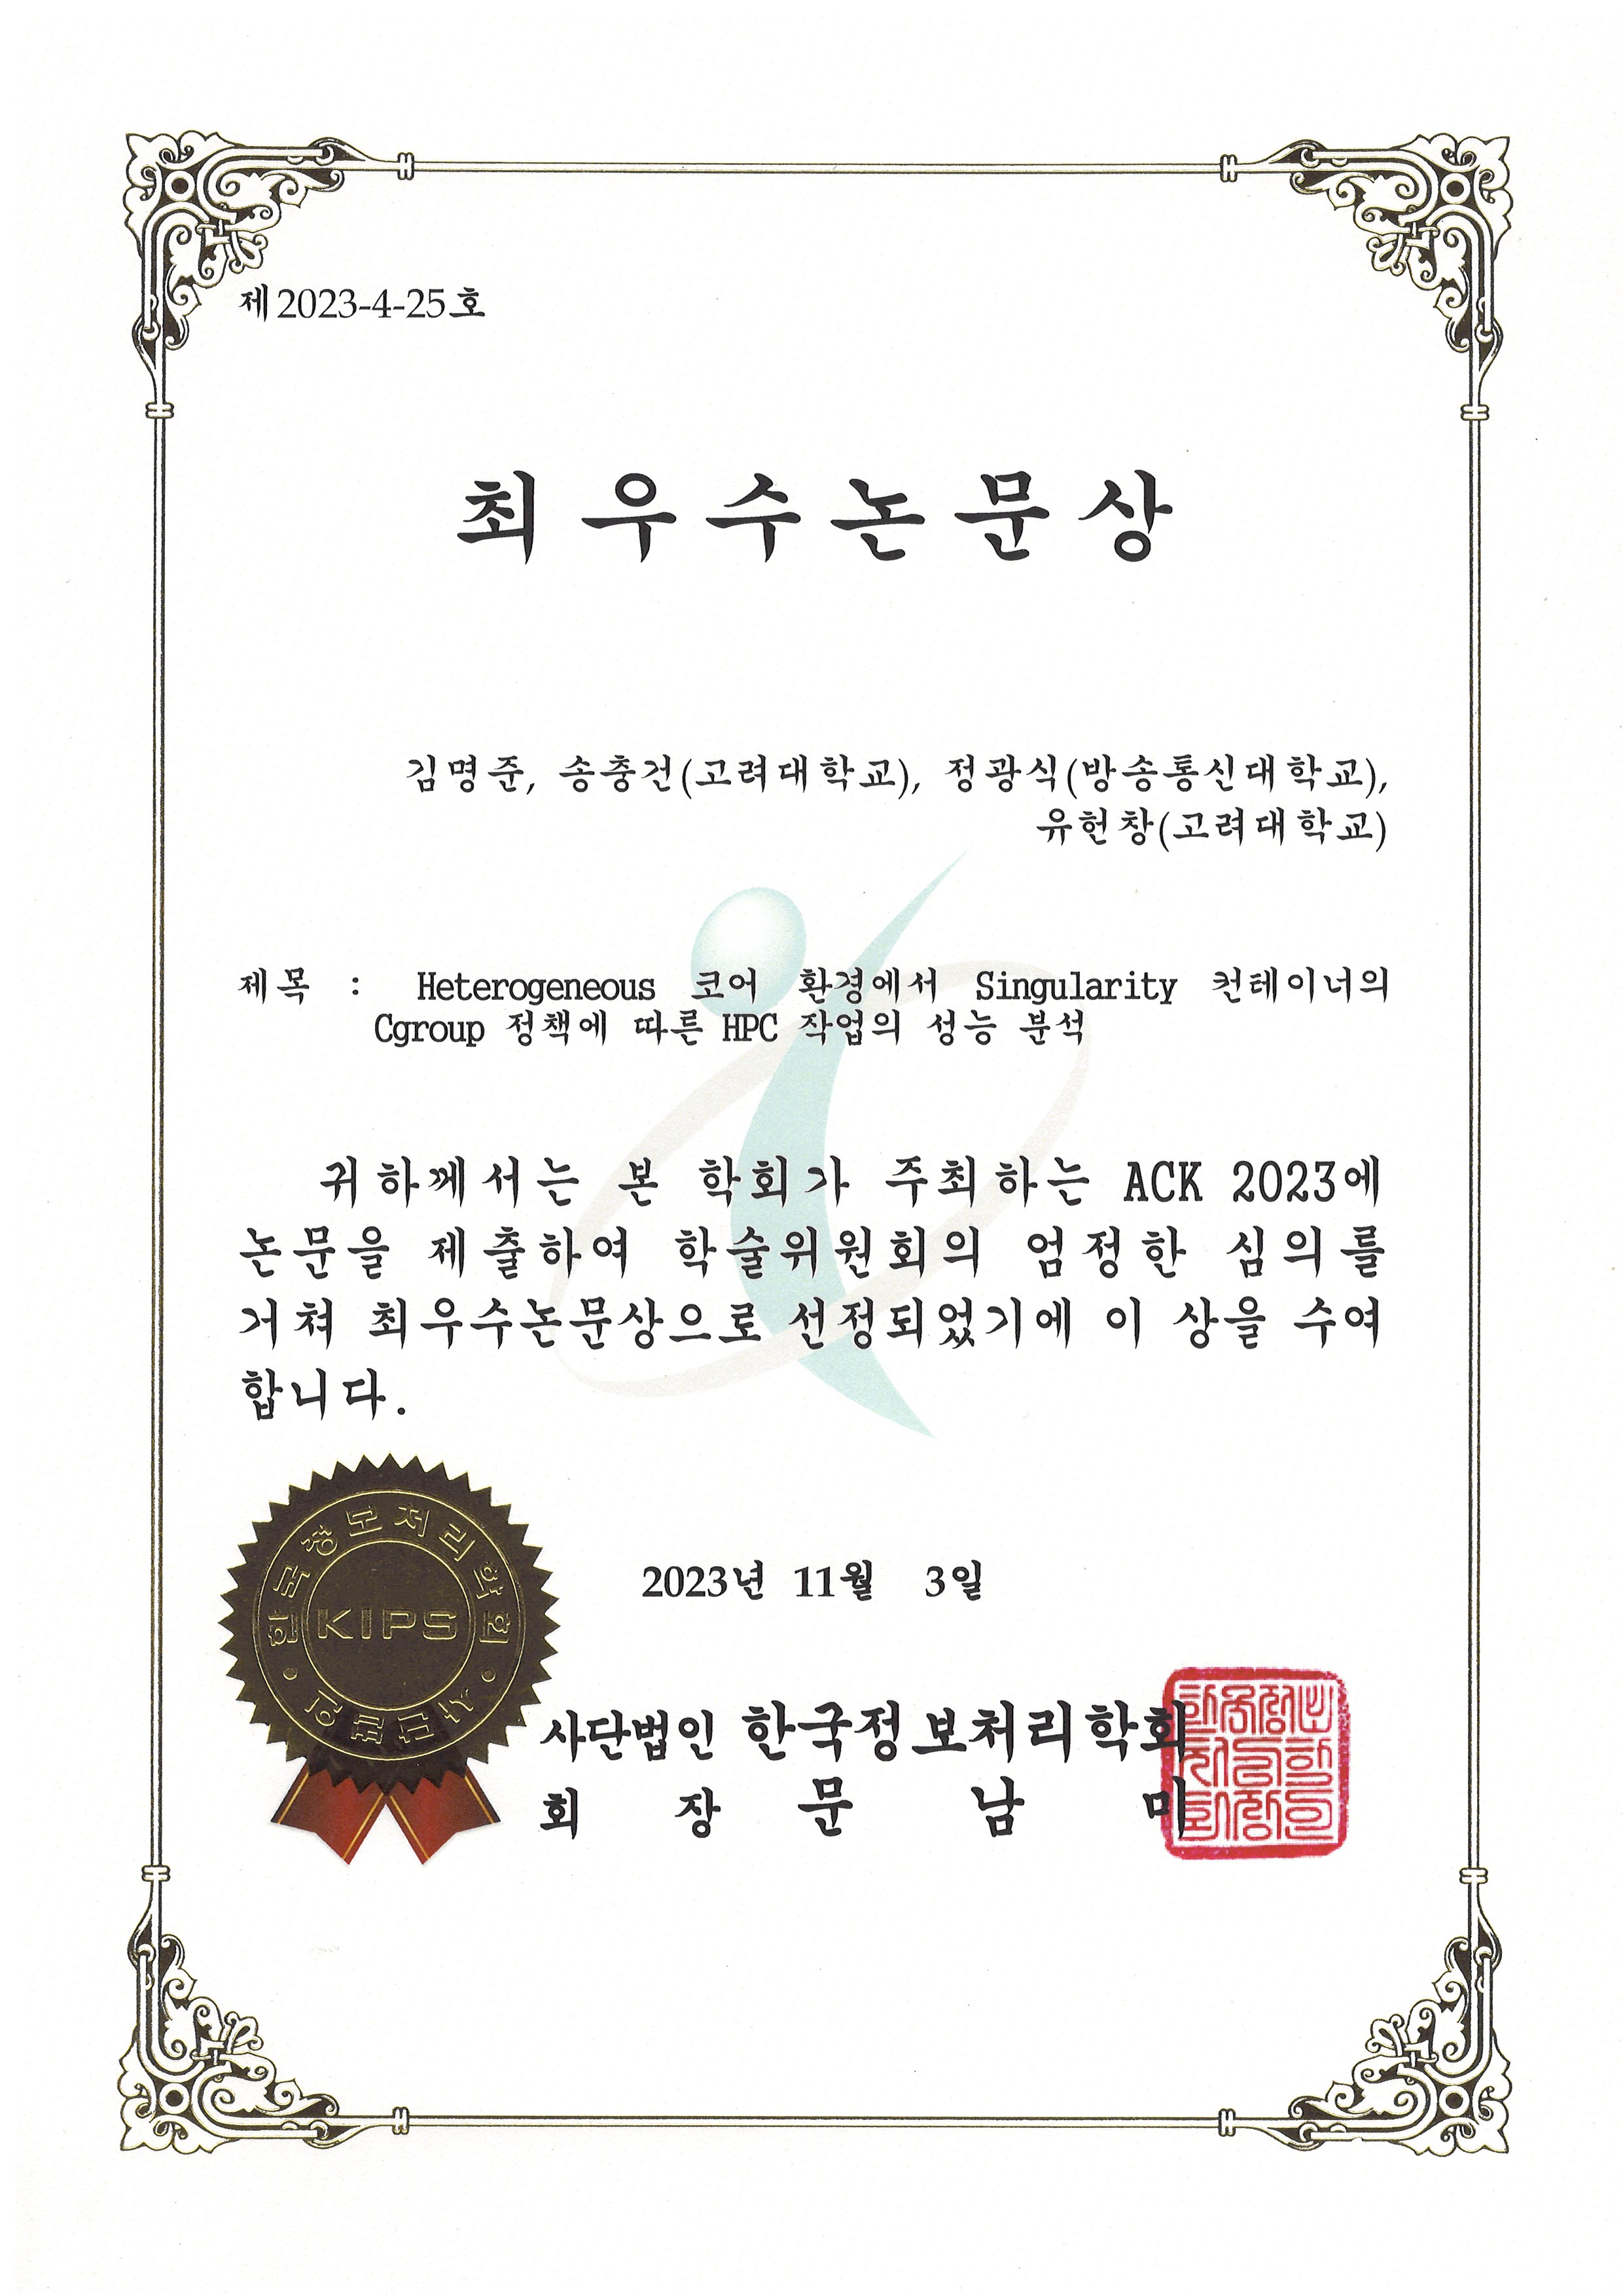 Myeongjun Kim (M.S. student)'s award.